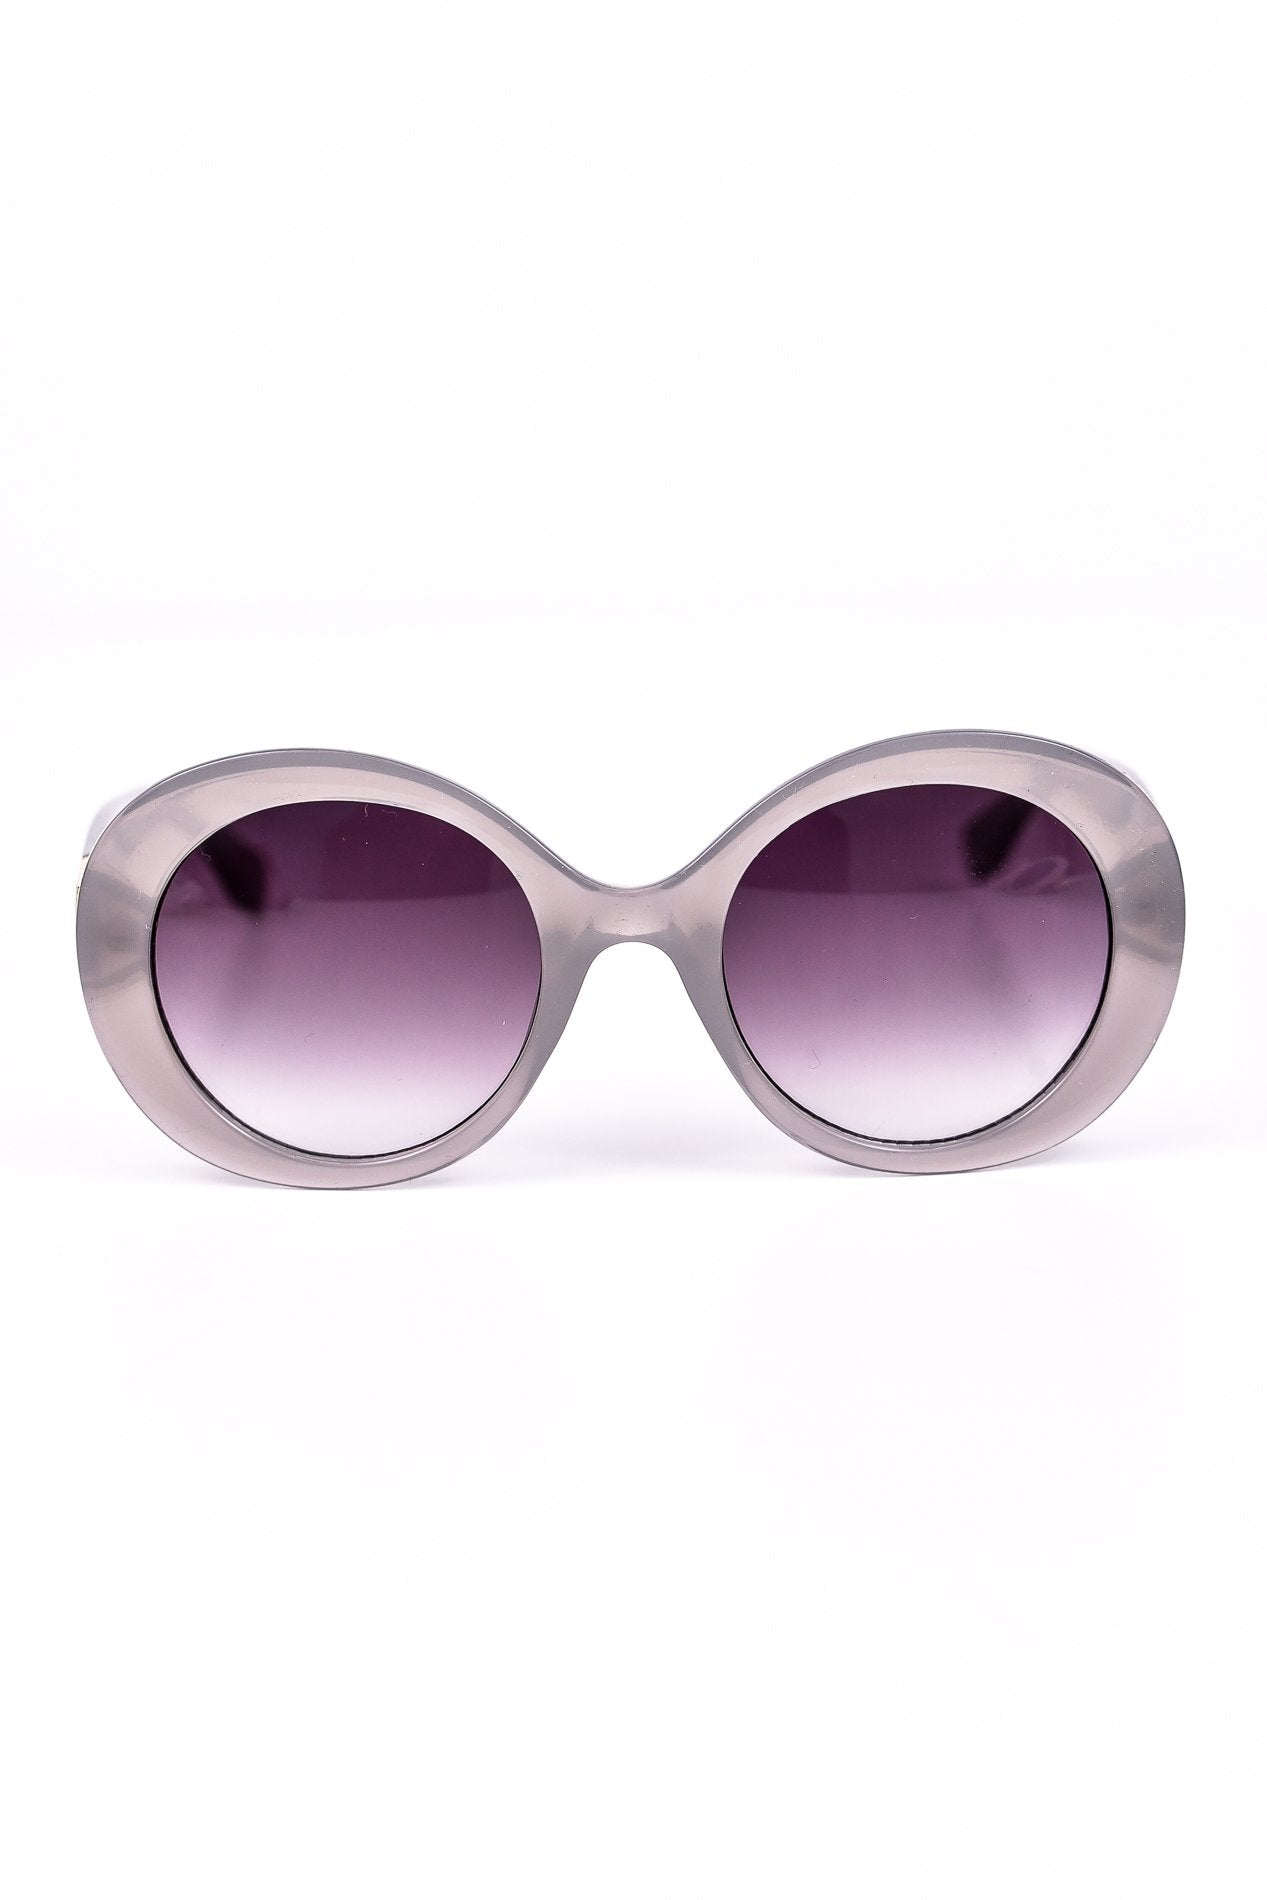 Gray Round Frame Sunglasses - SGL189GR - FREE hard case